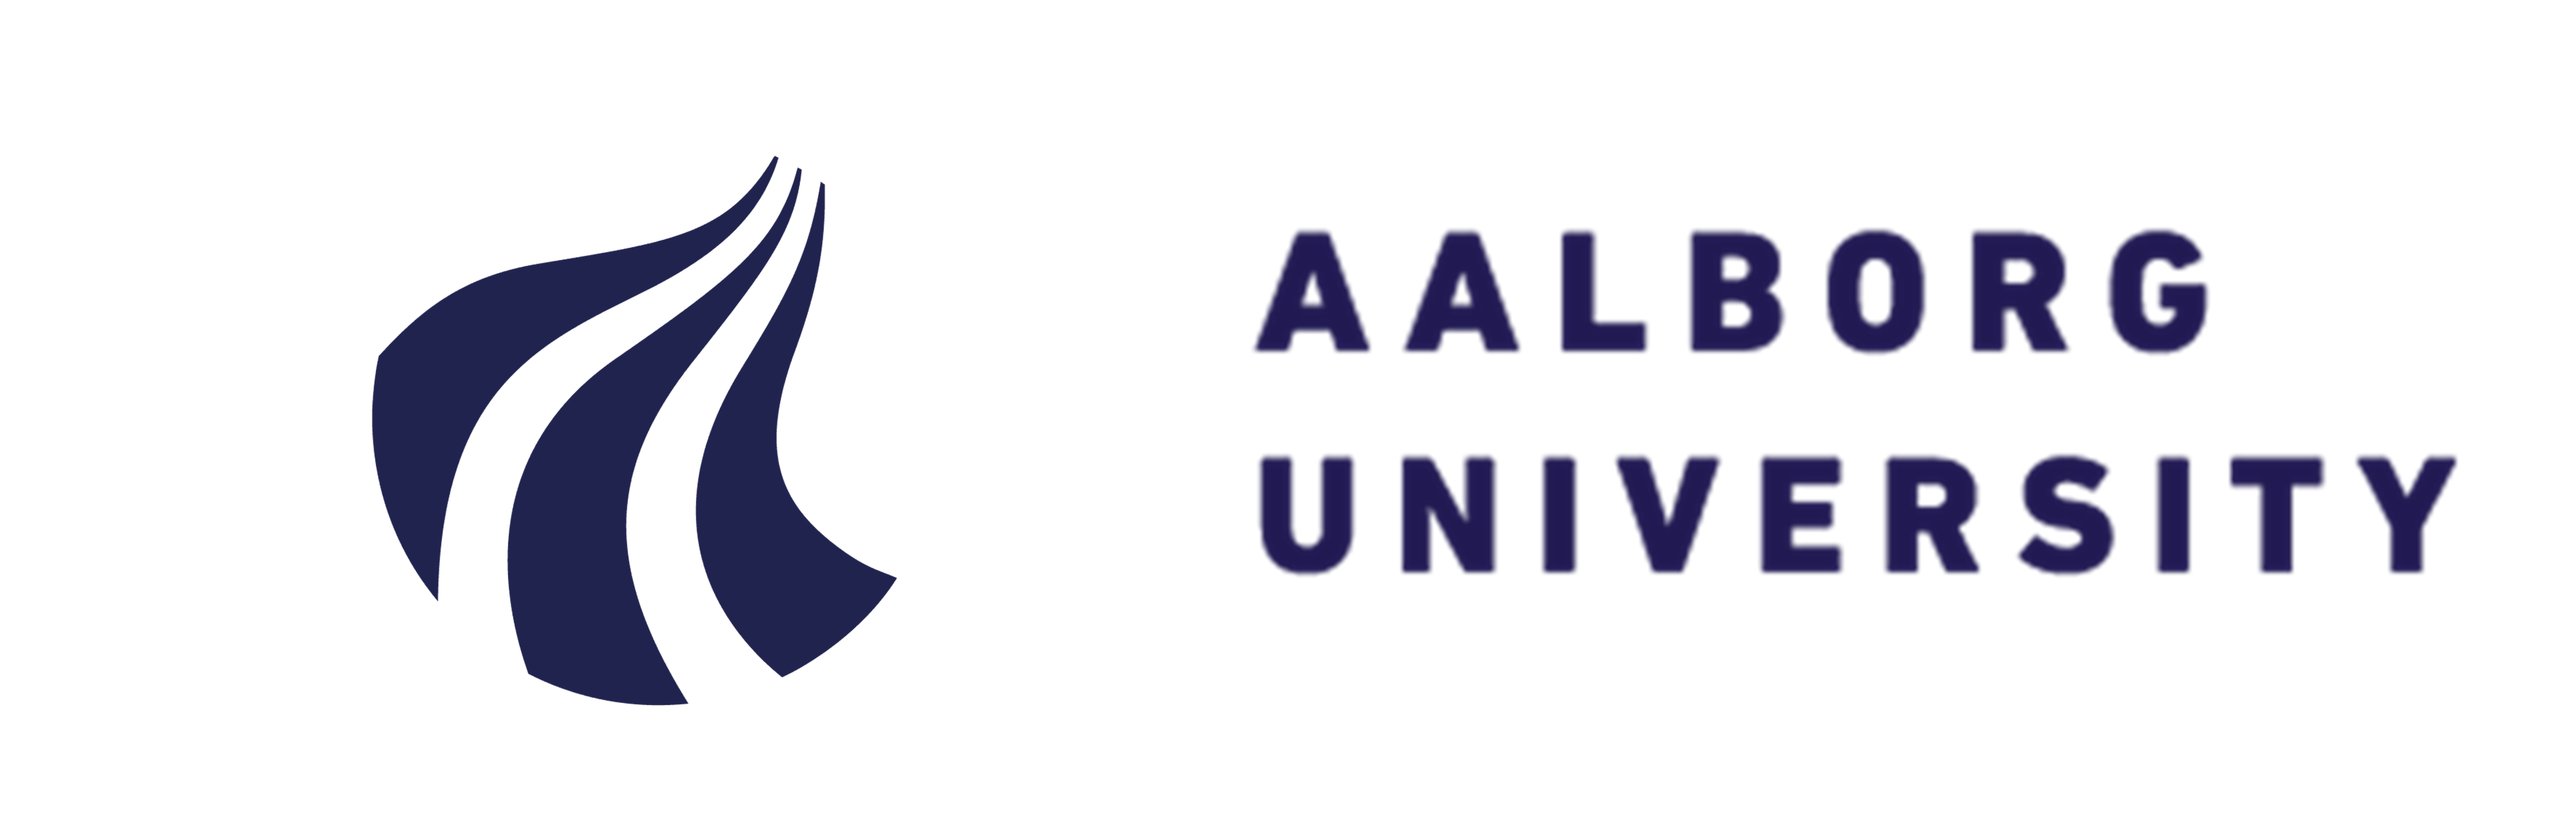 Aalborg Logo Def